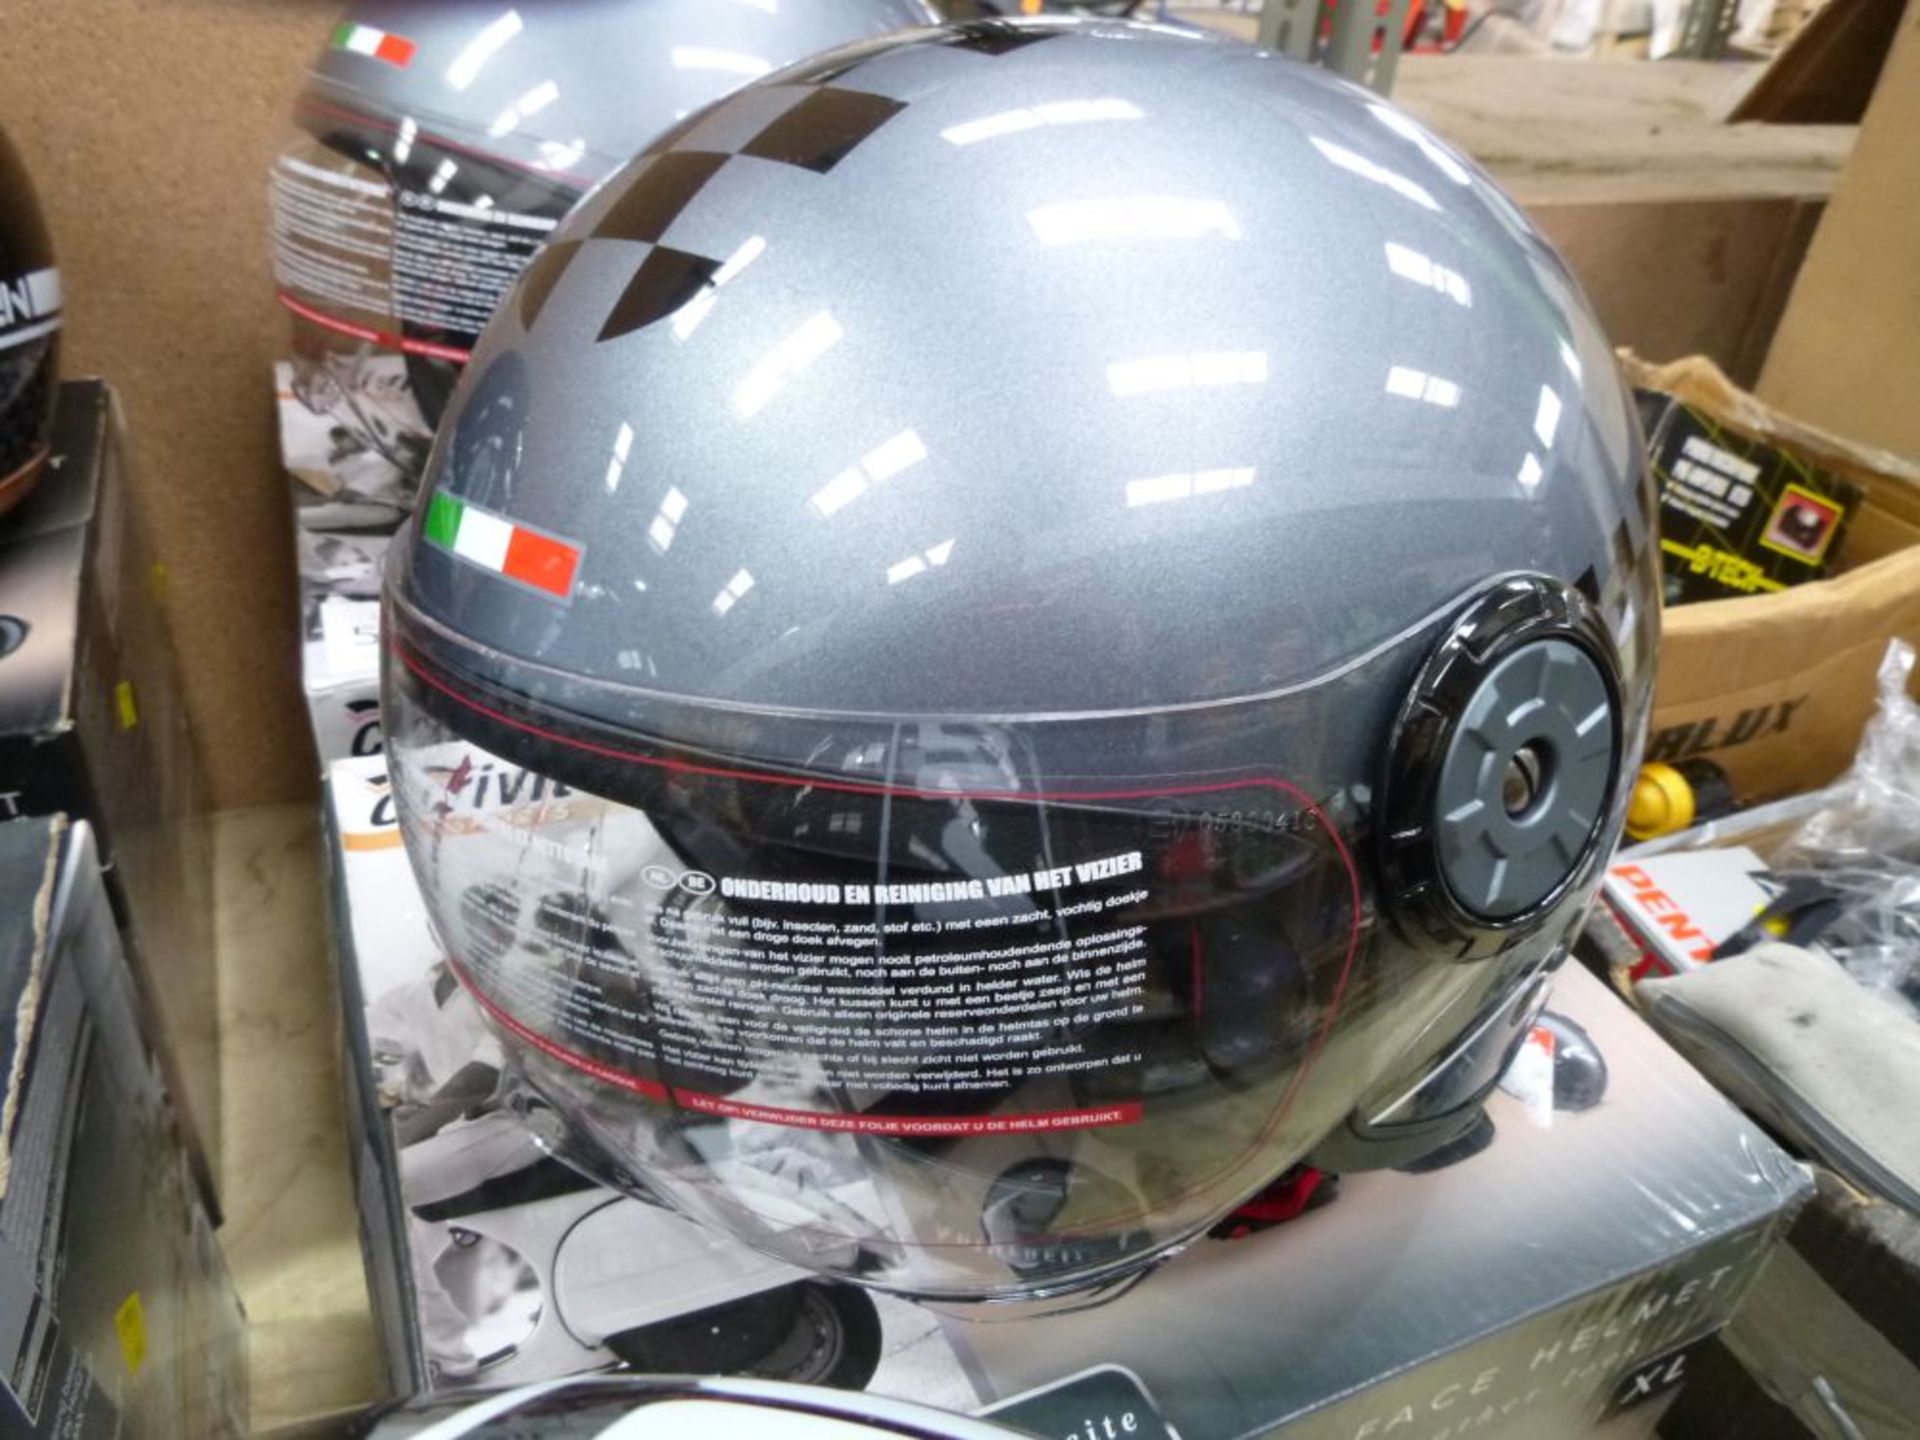 A Crivit Open Face Helmet size XL